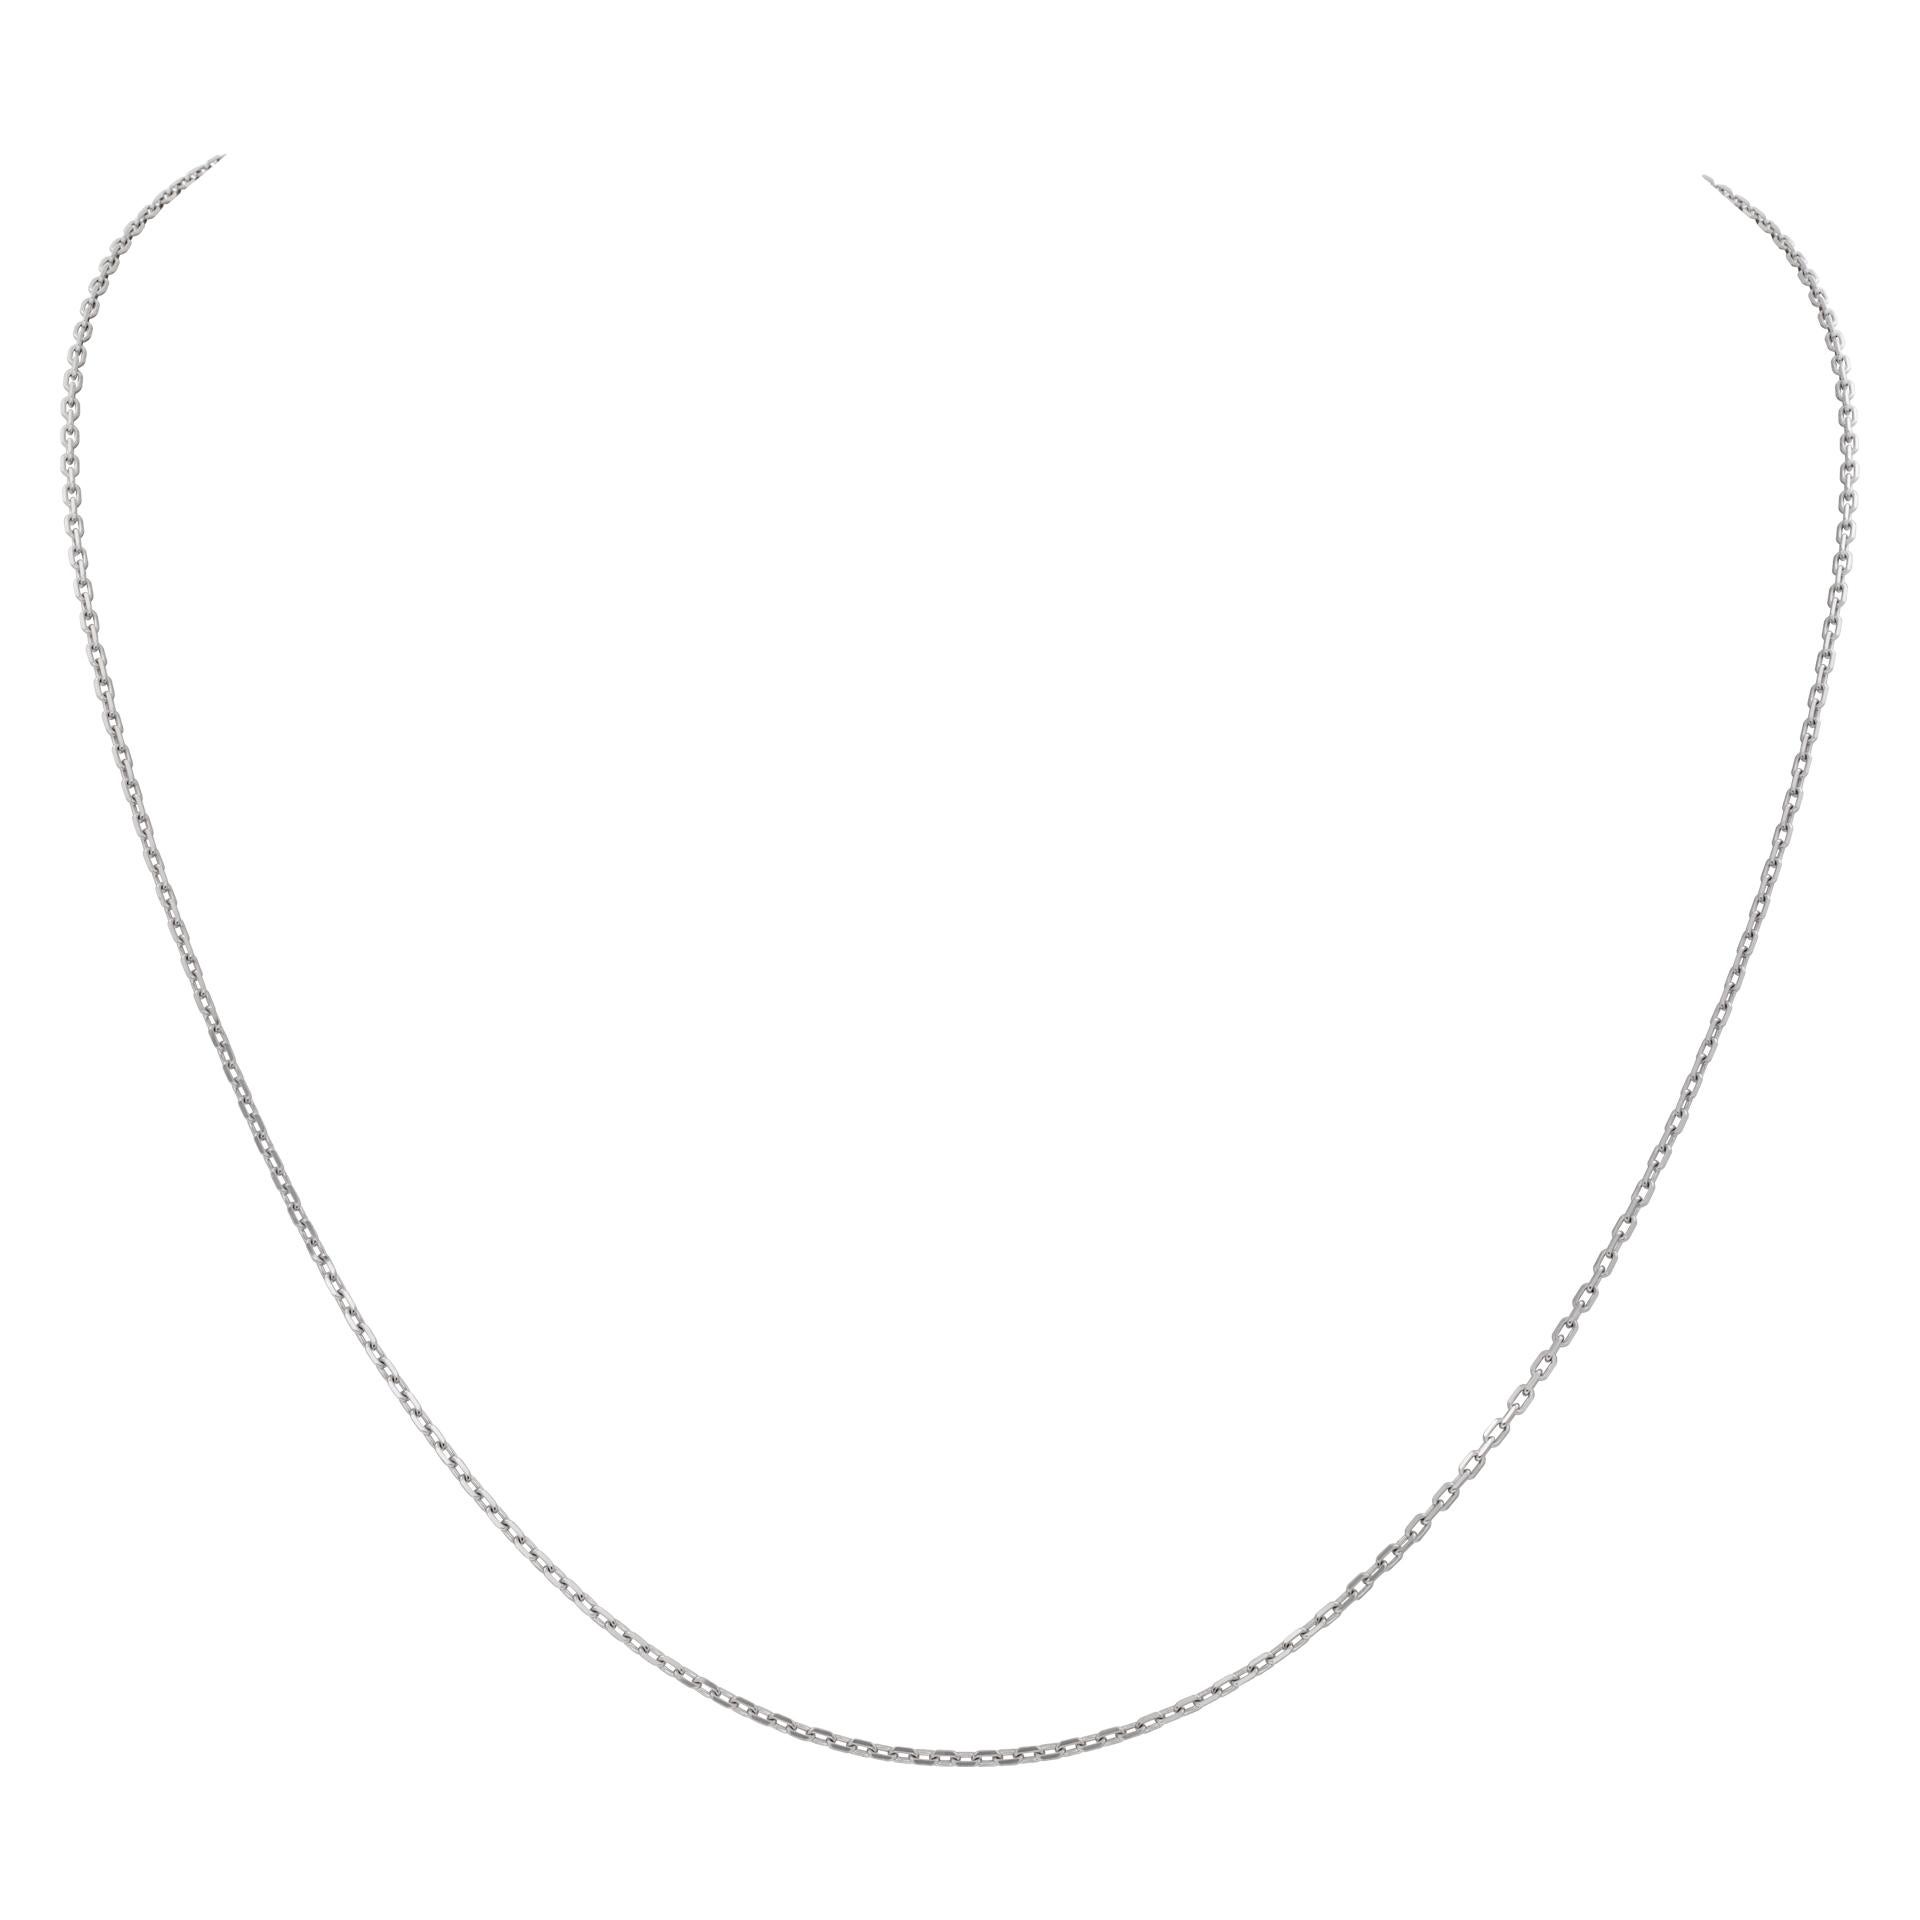 White gold thin link chain